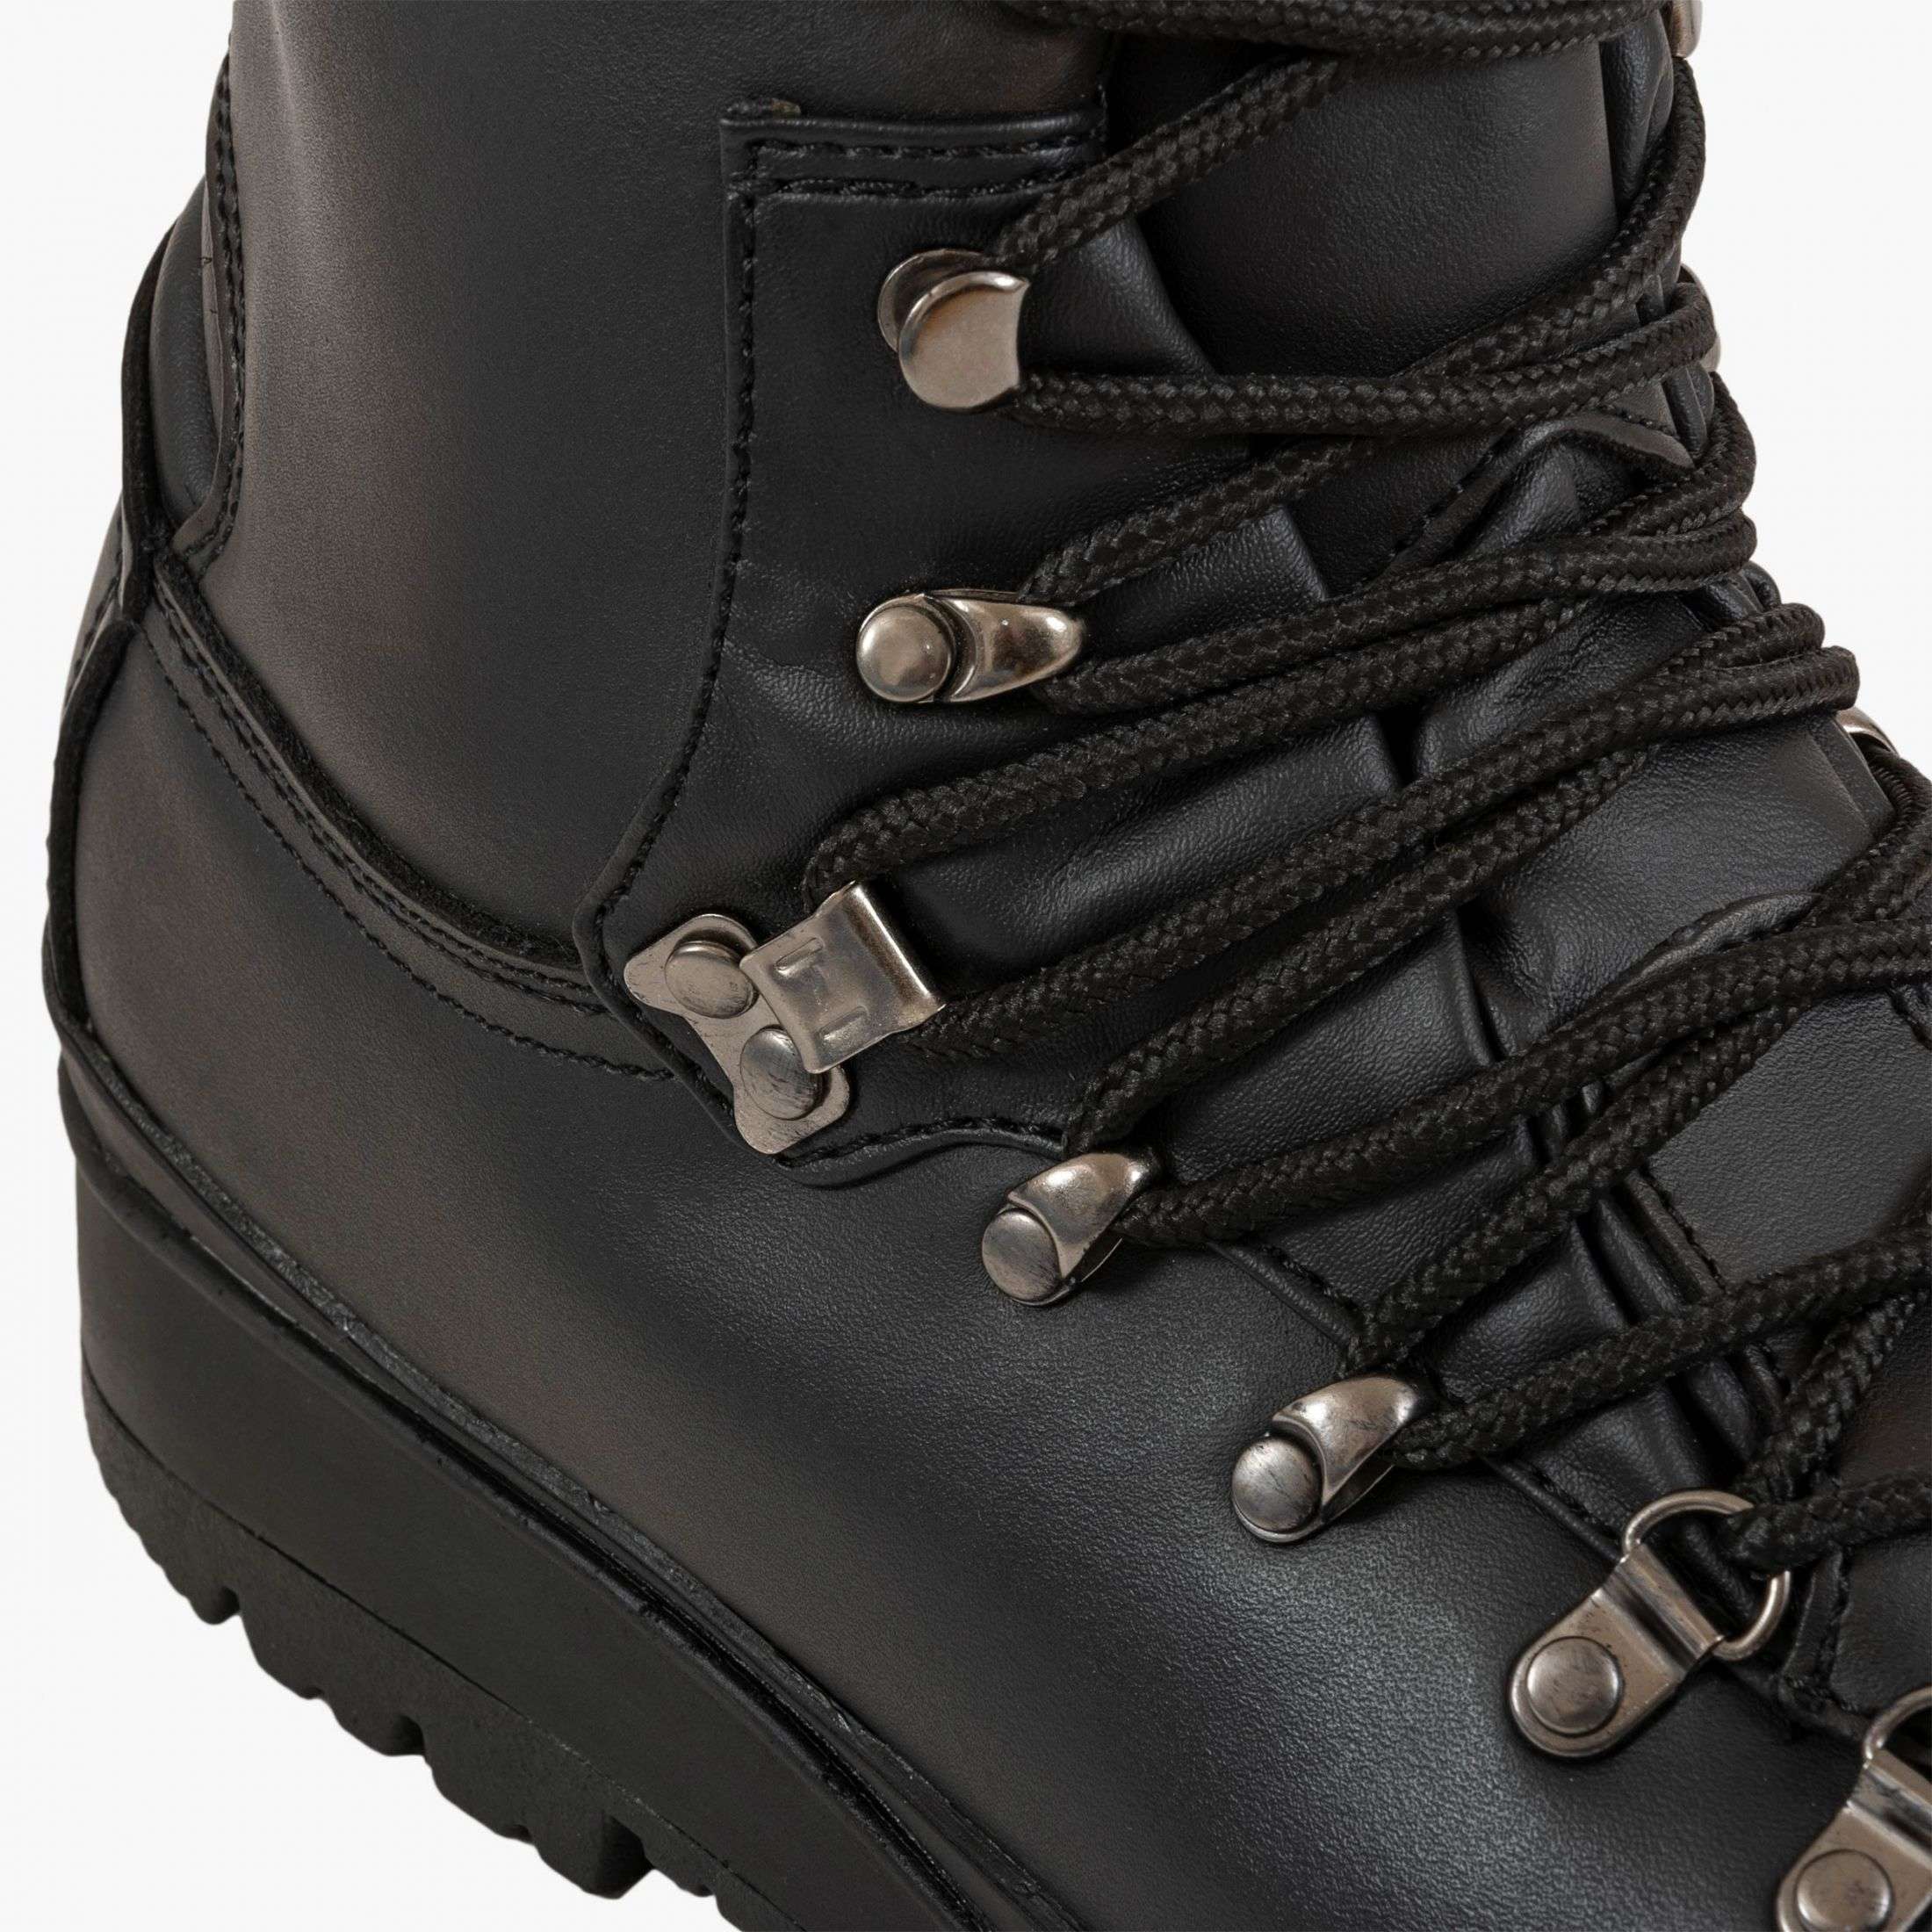 Highlander, Highlander Elite Boots, Hiking & Patrol Boots, Wylies Outdoor World,